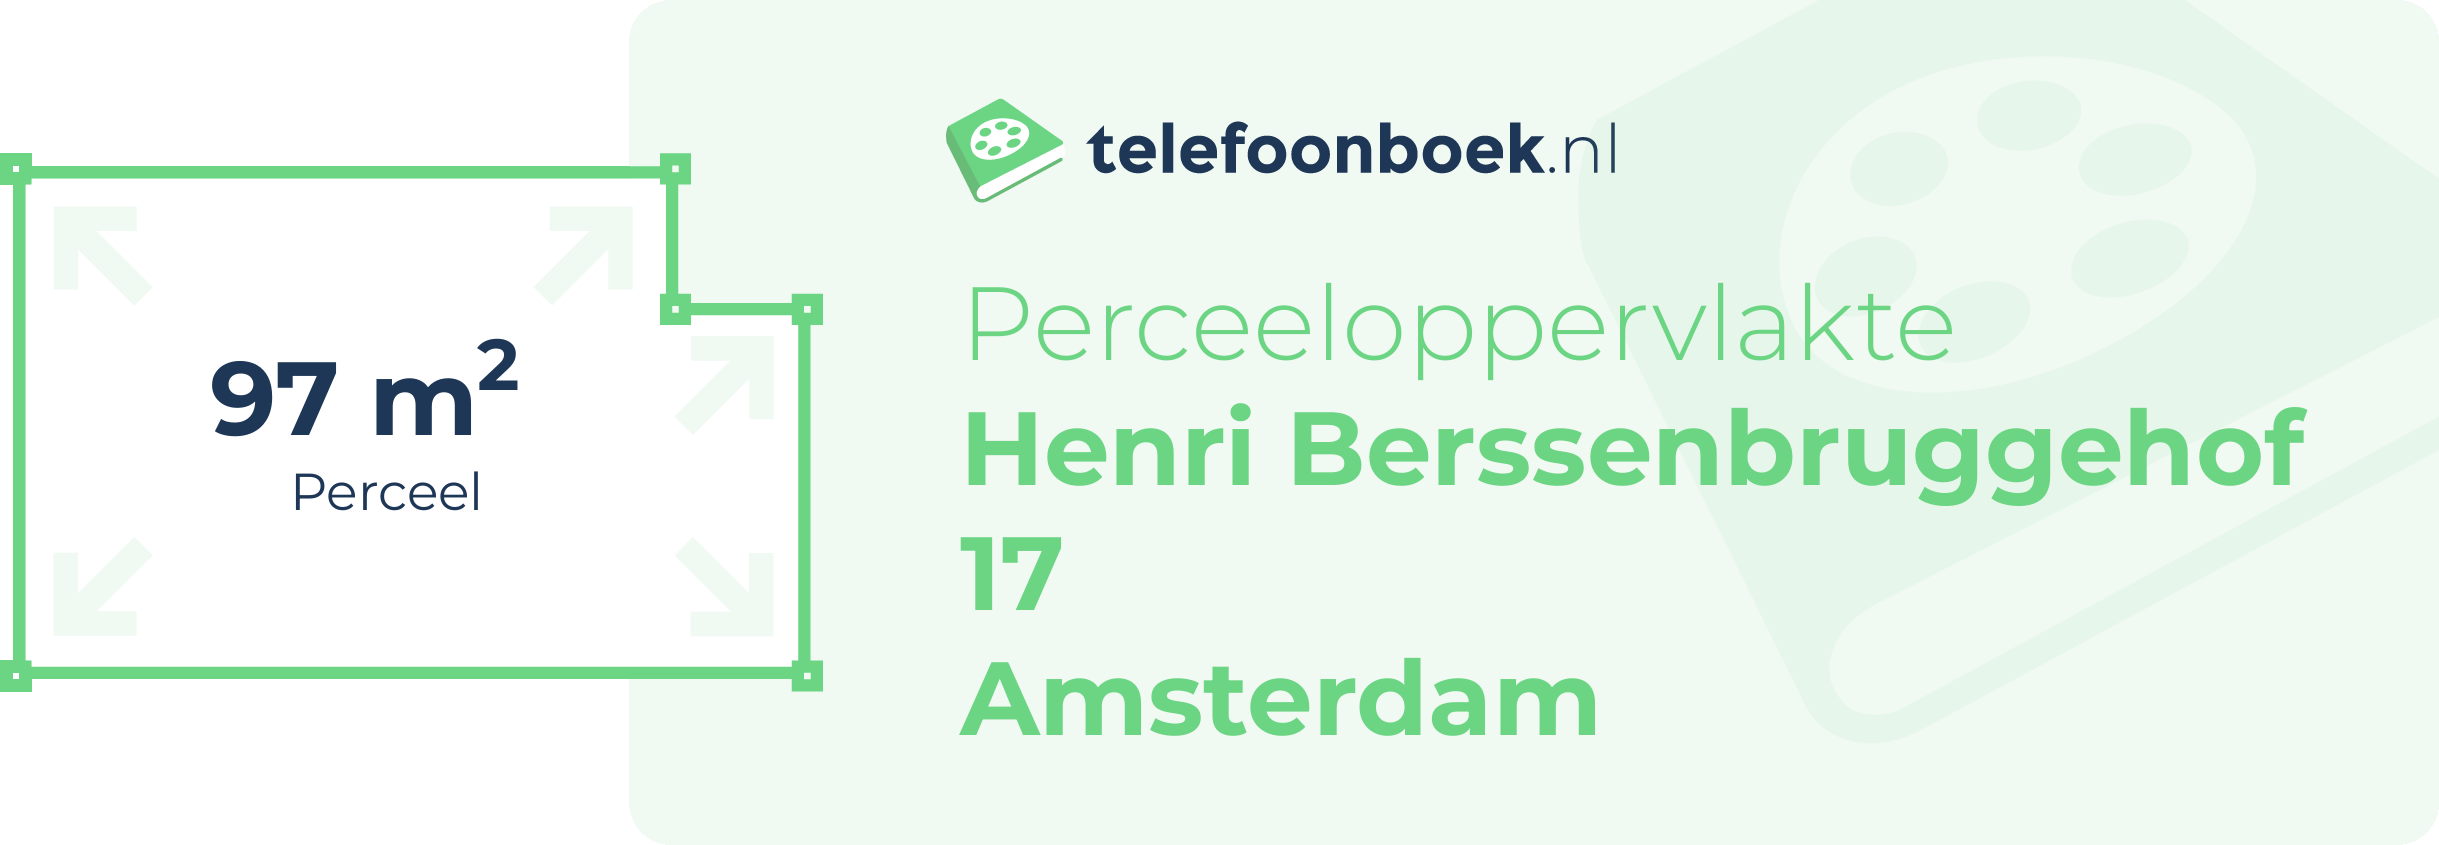 Perceeloppervlakte Henri Berssenbruggehof 17 Amsterdam